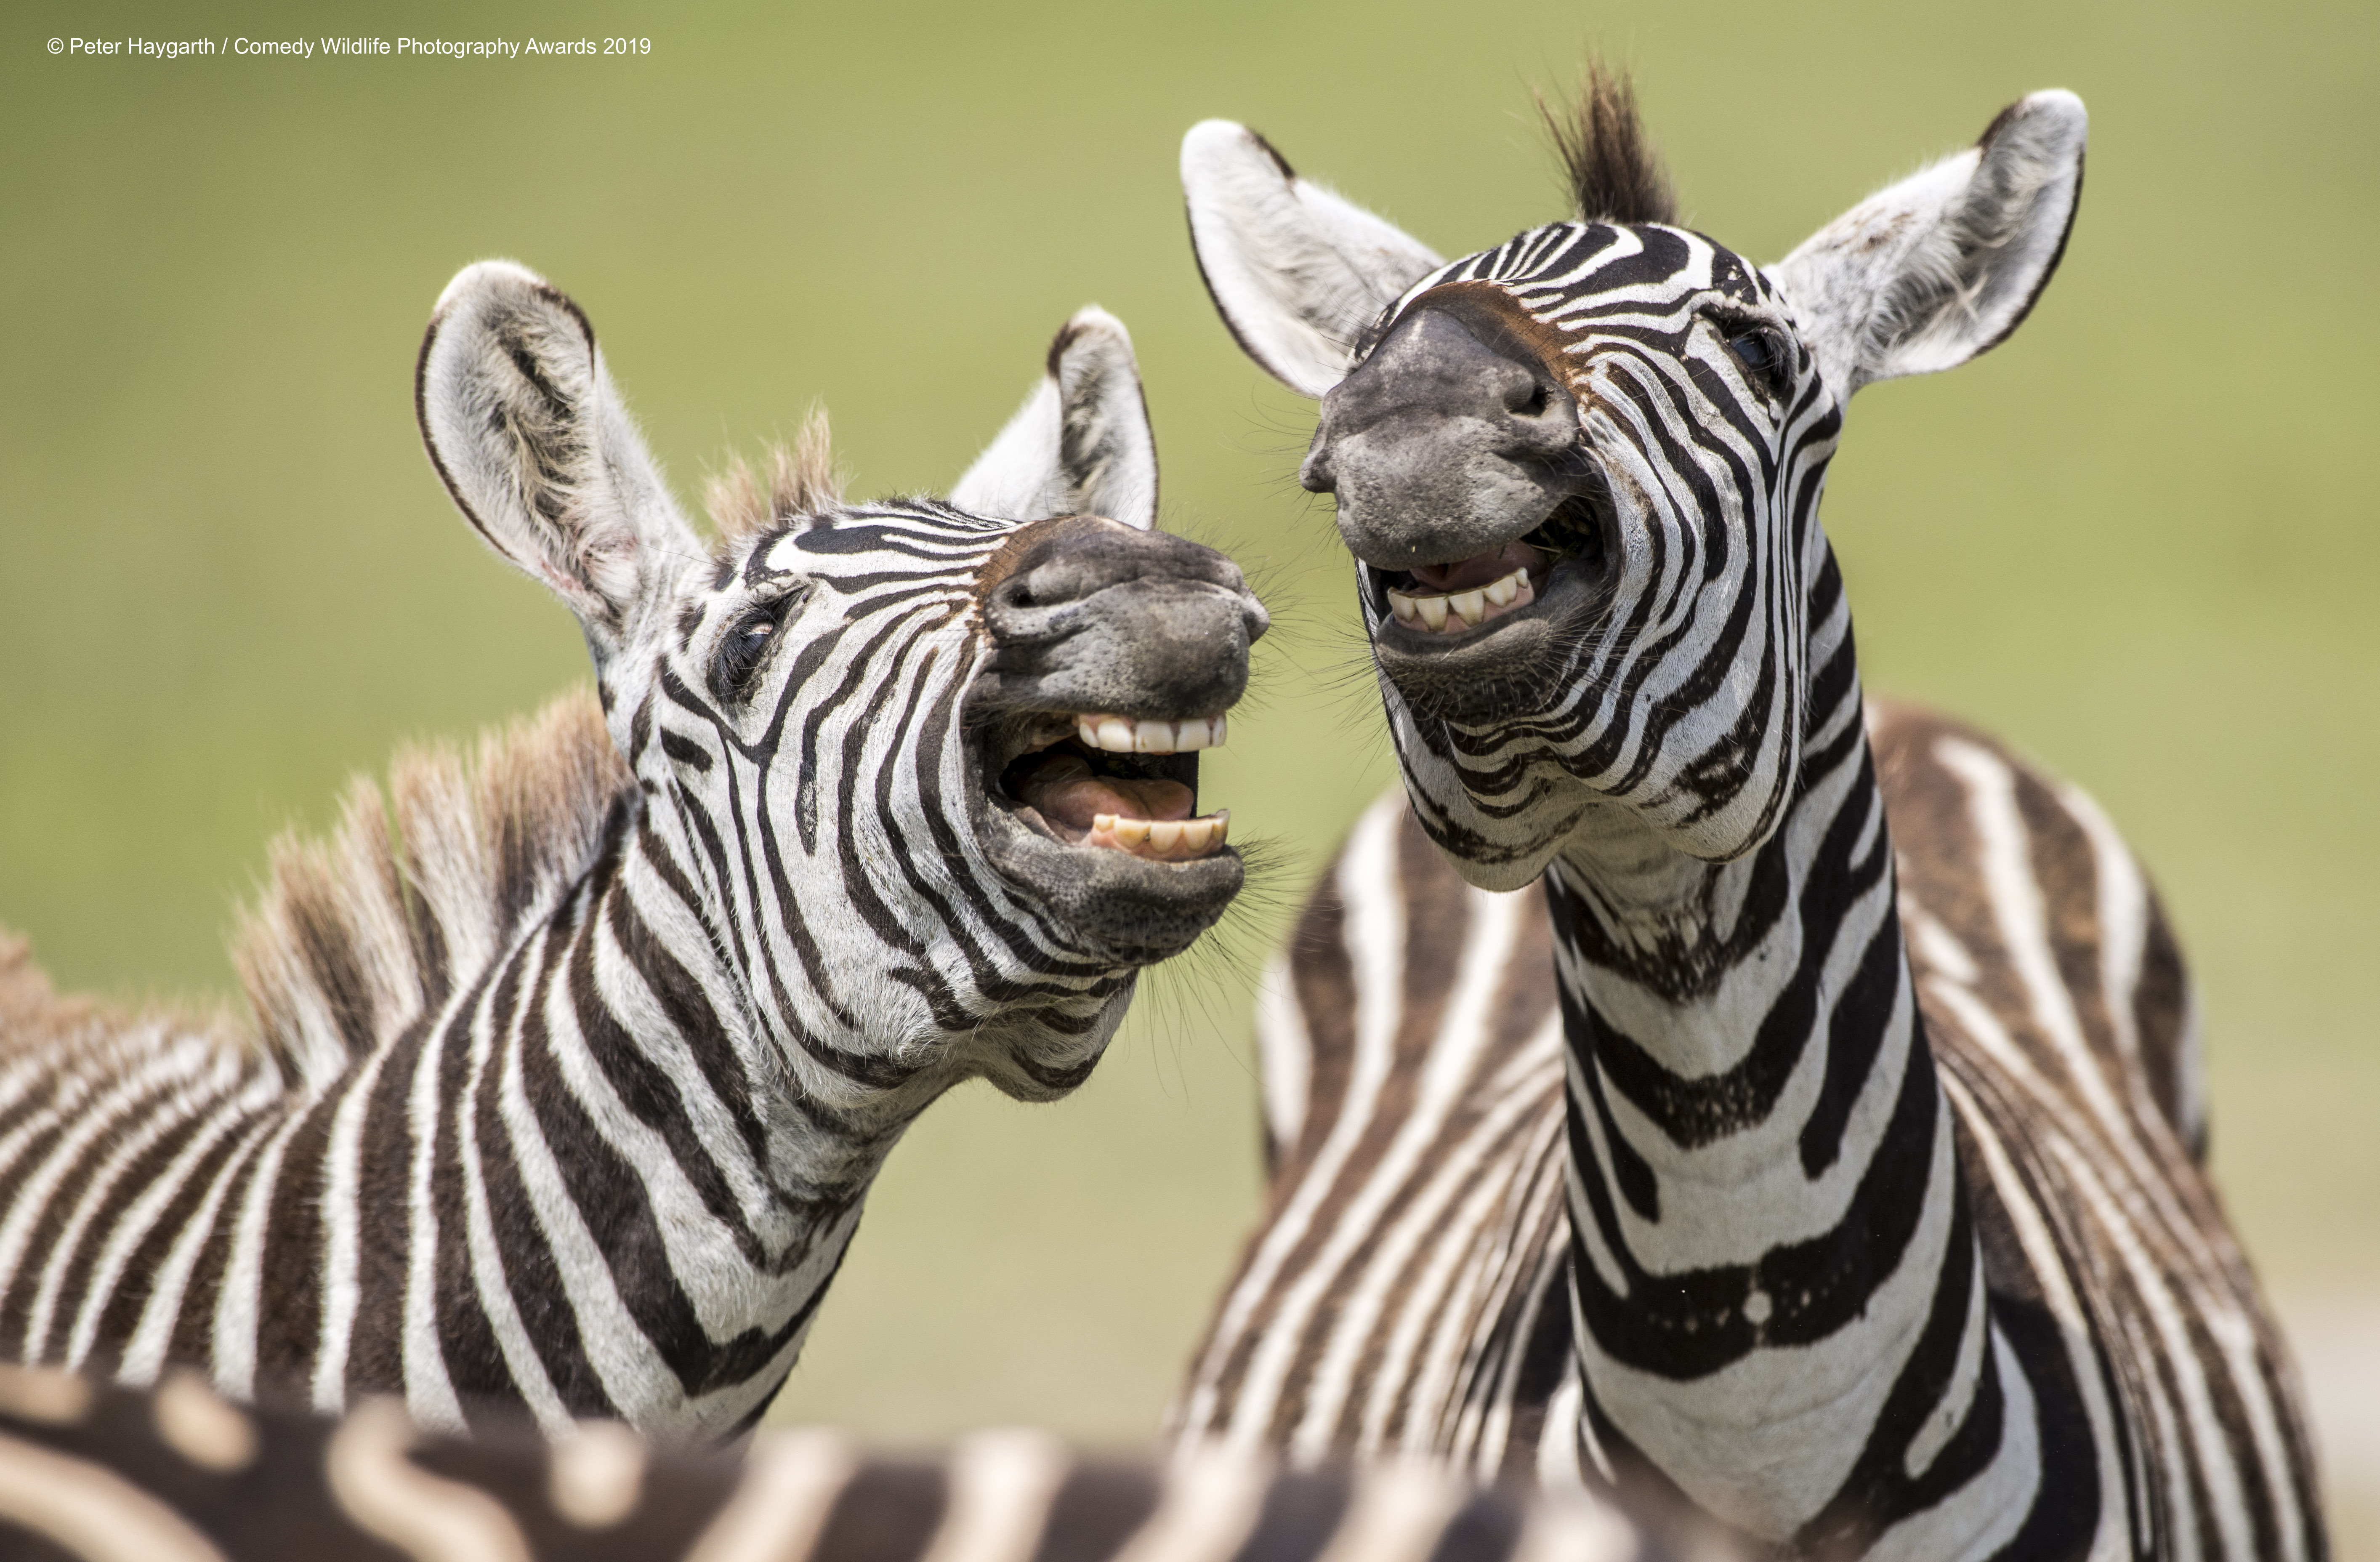 Dobro raspoložene zebre, snimio Peter Haygarth
